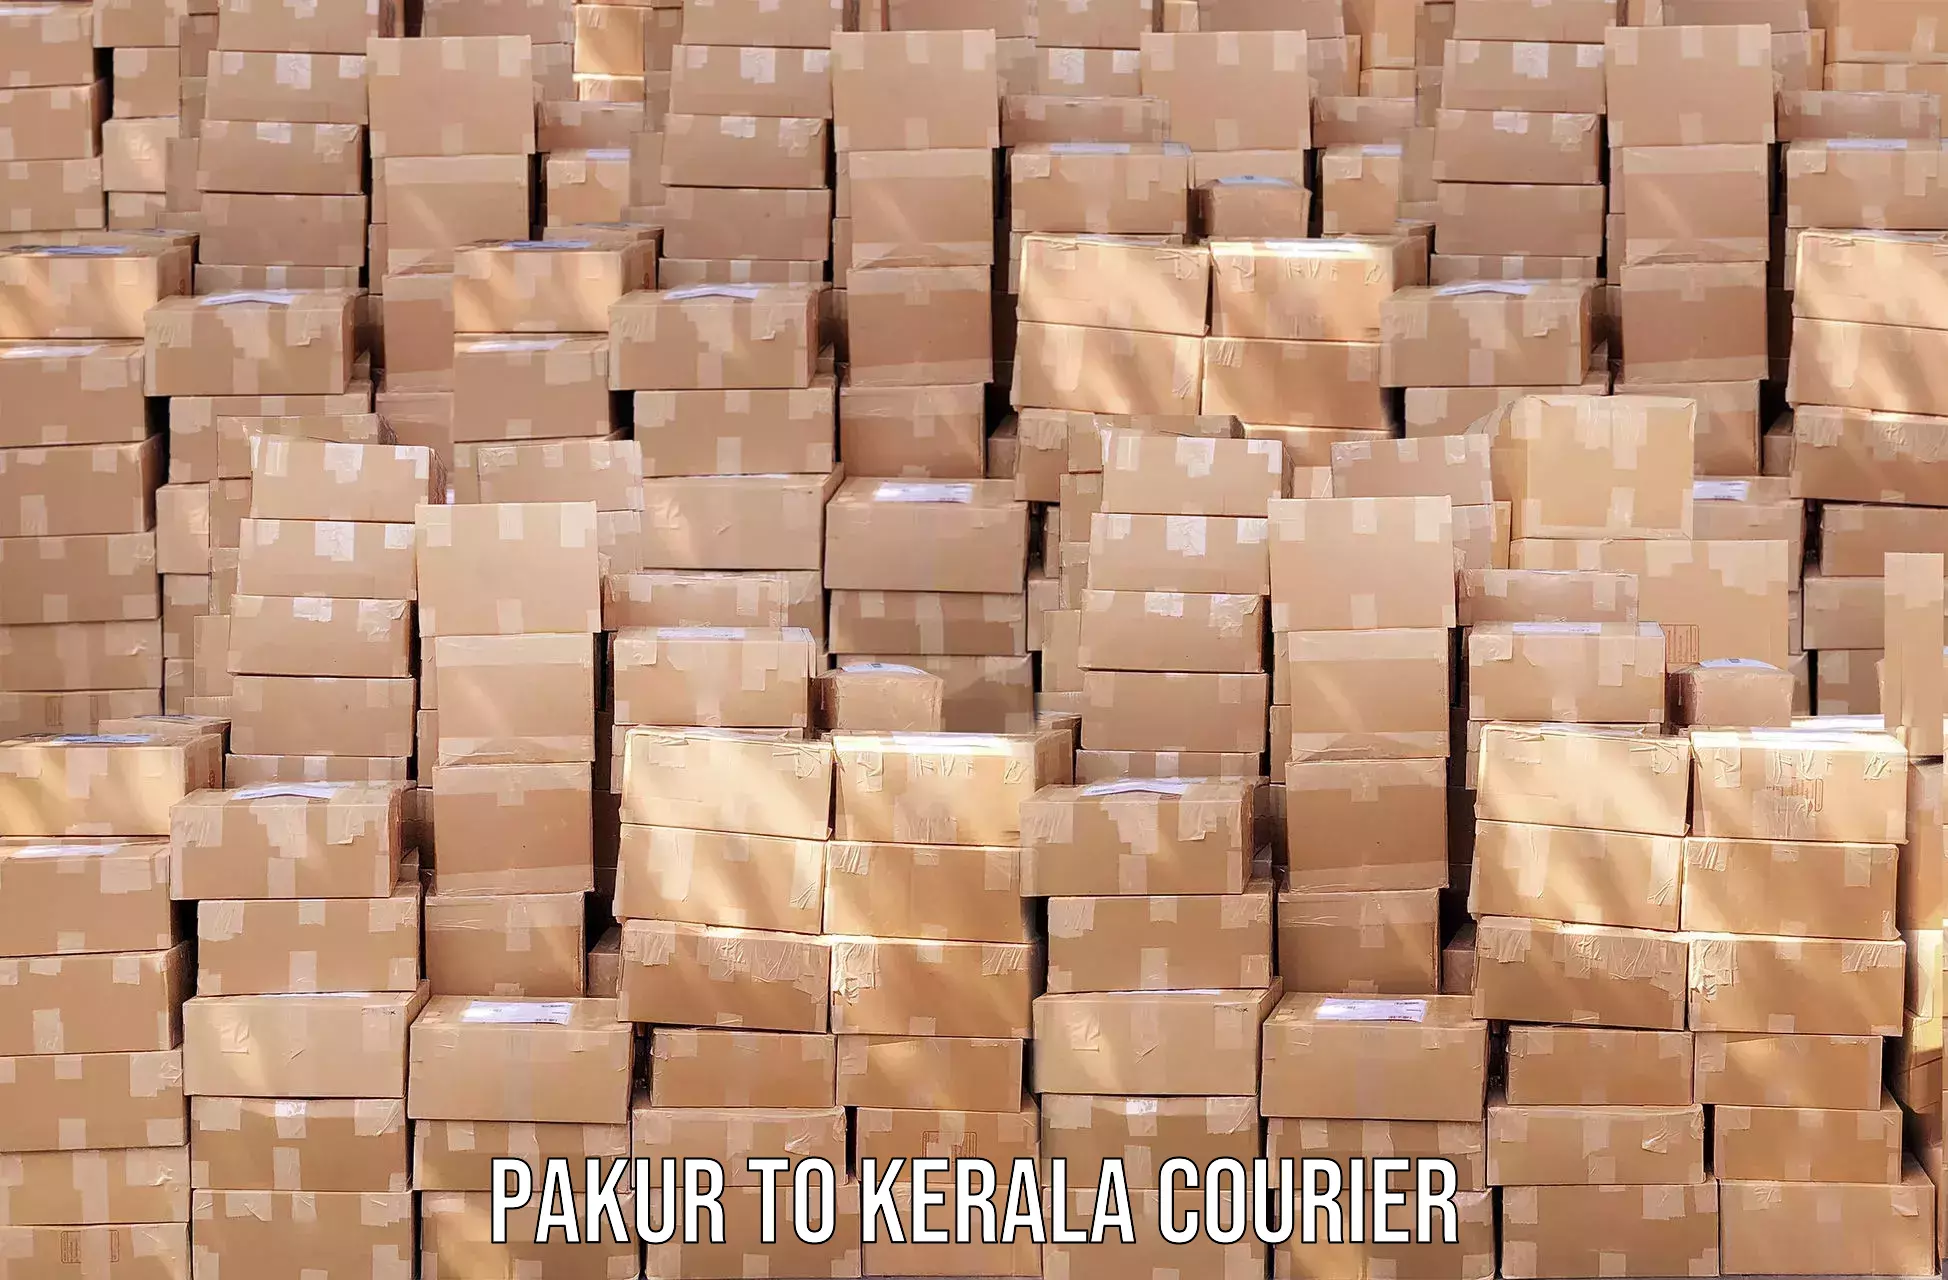 Easy return solutions Pakur to Kannur